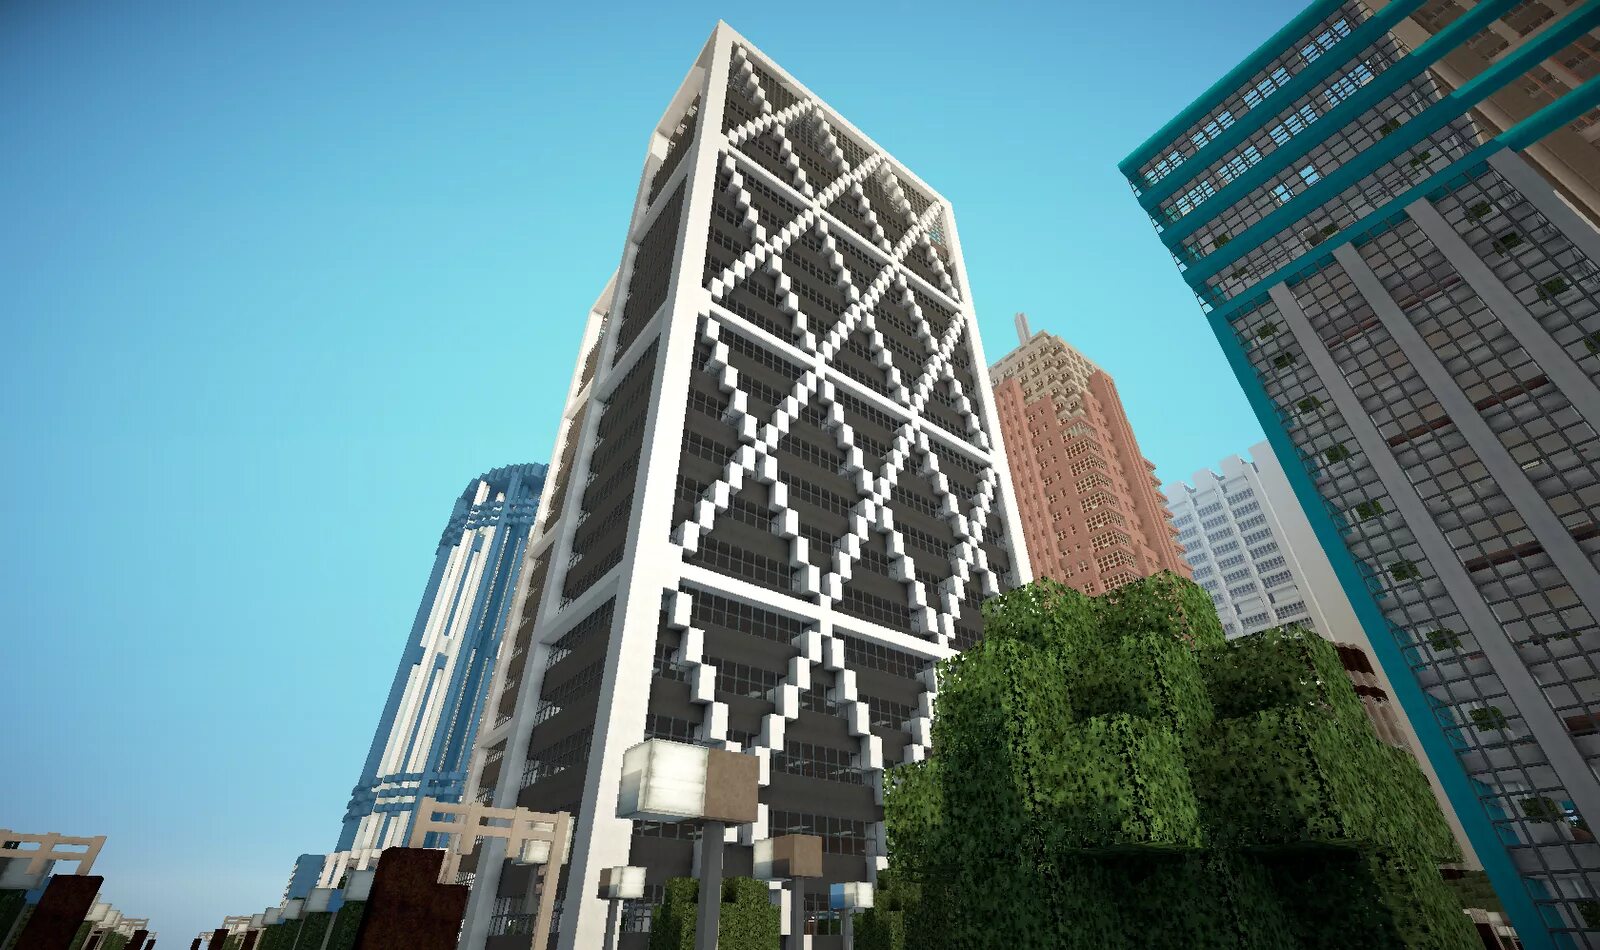 Minecraft properties. Здания в МАЙНКРАФТЕ для города. Современный город в МАЙНКРАФТЕ. Высотные здания в МАЙНКРАФТЕ. Городские постройки.